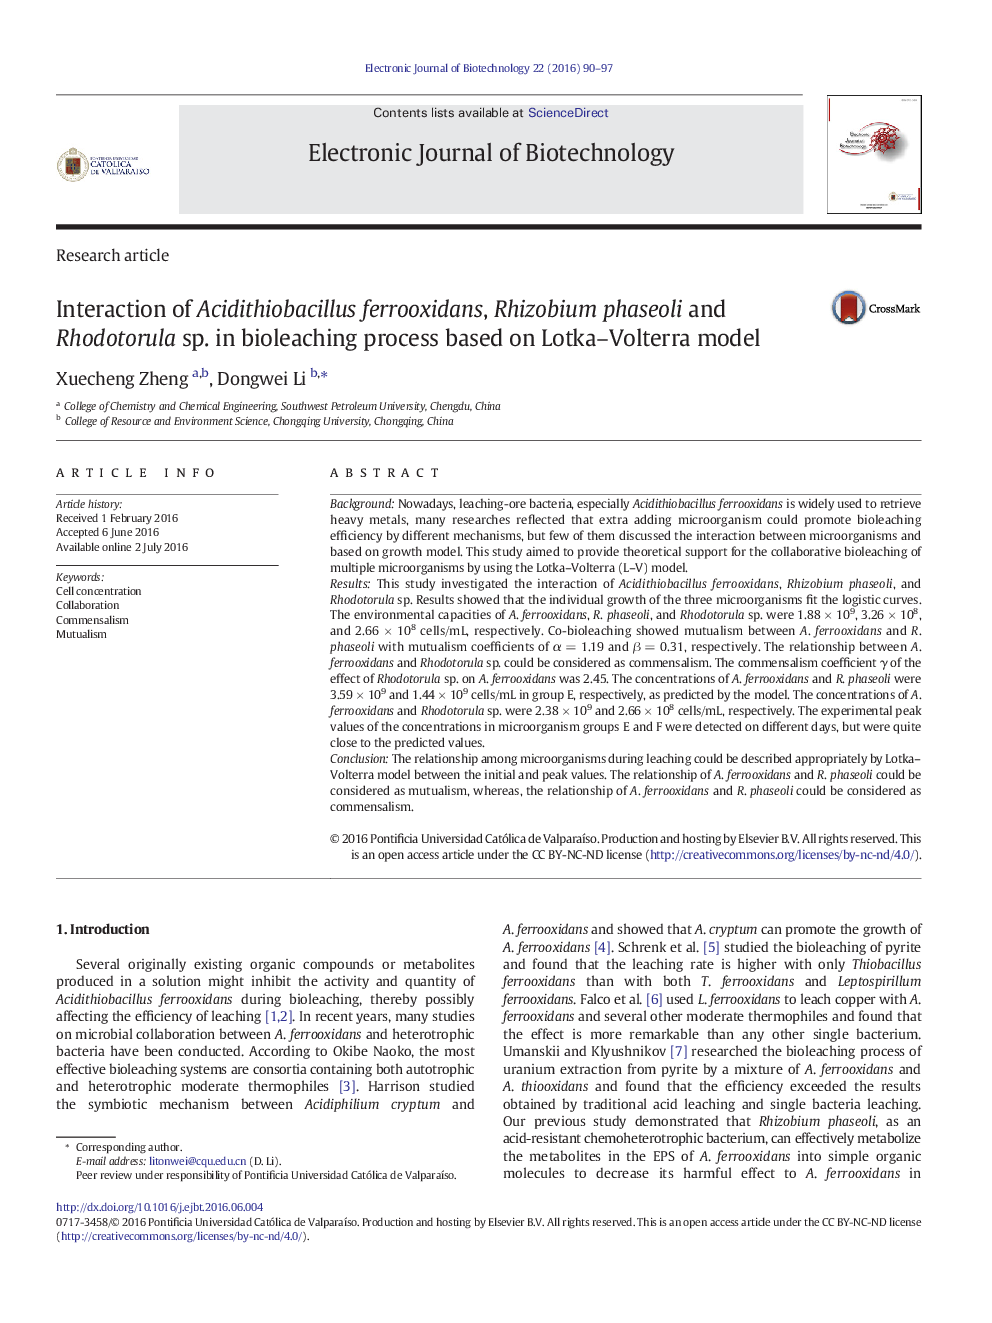 Interaction of Acidithiobacillus ferrooxidans, Rhizobium phaseoli and Rhodotorula sp. in bioleaching process based on Lotka–Volterra model